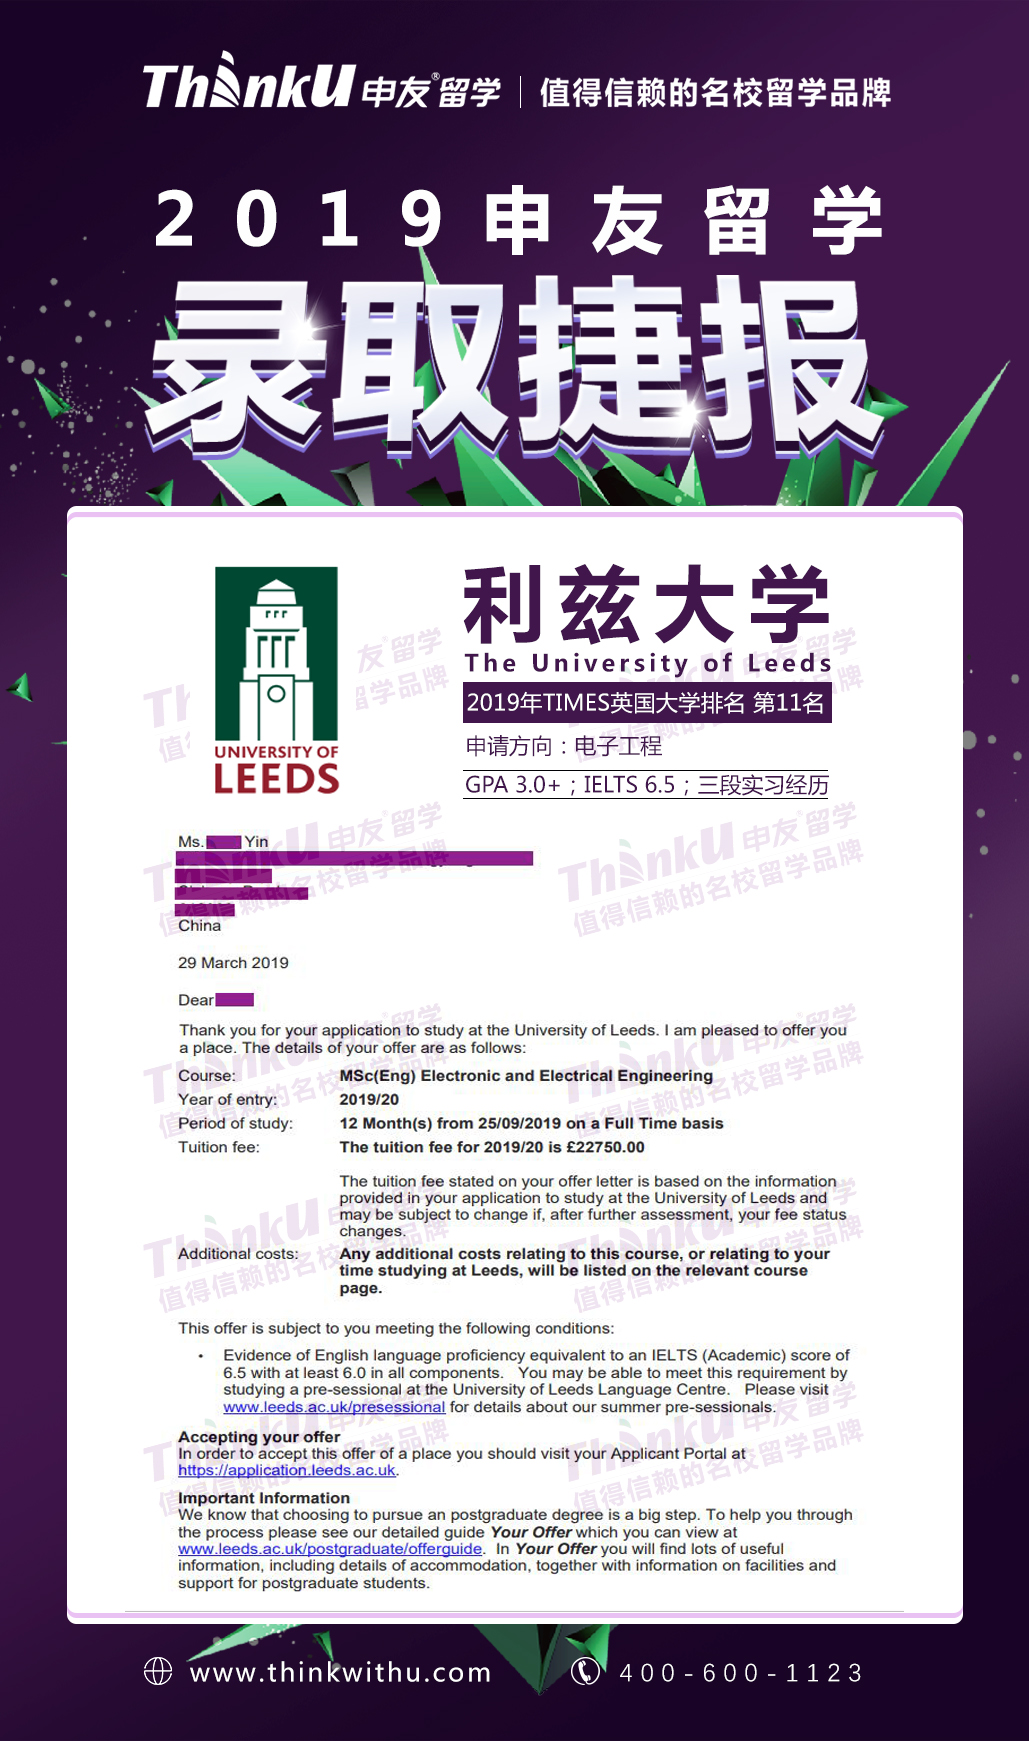 南昌大学-殷同学-利兹大学MSc(Eng) Electronic and Electrical Engineering offer.jpg